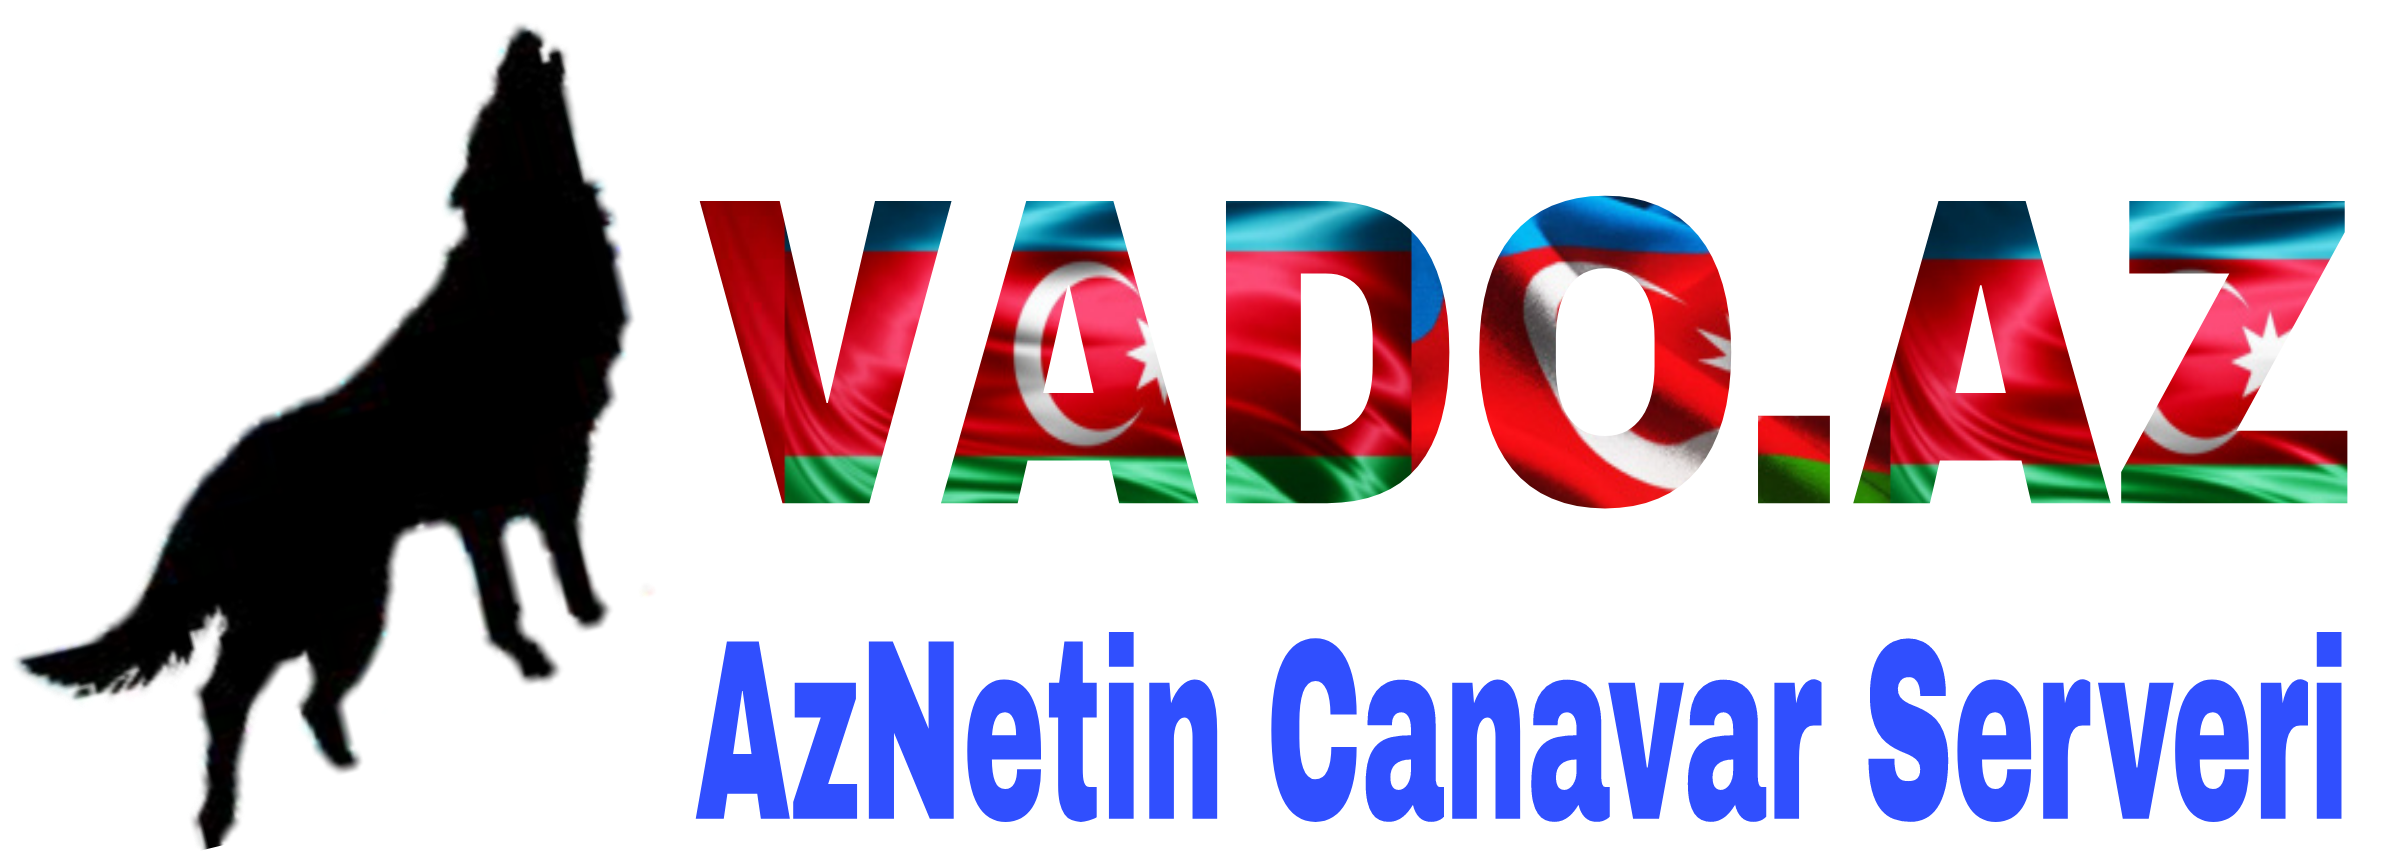  Vado-1.png